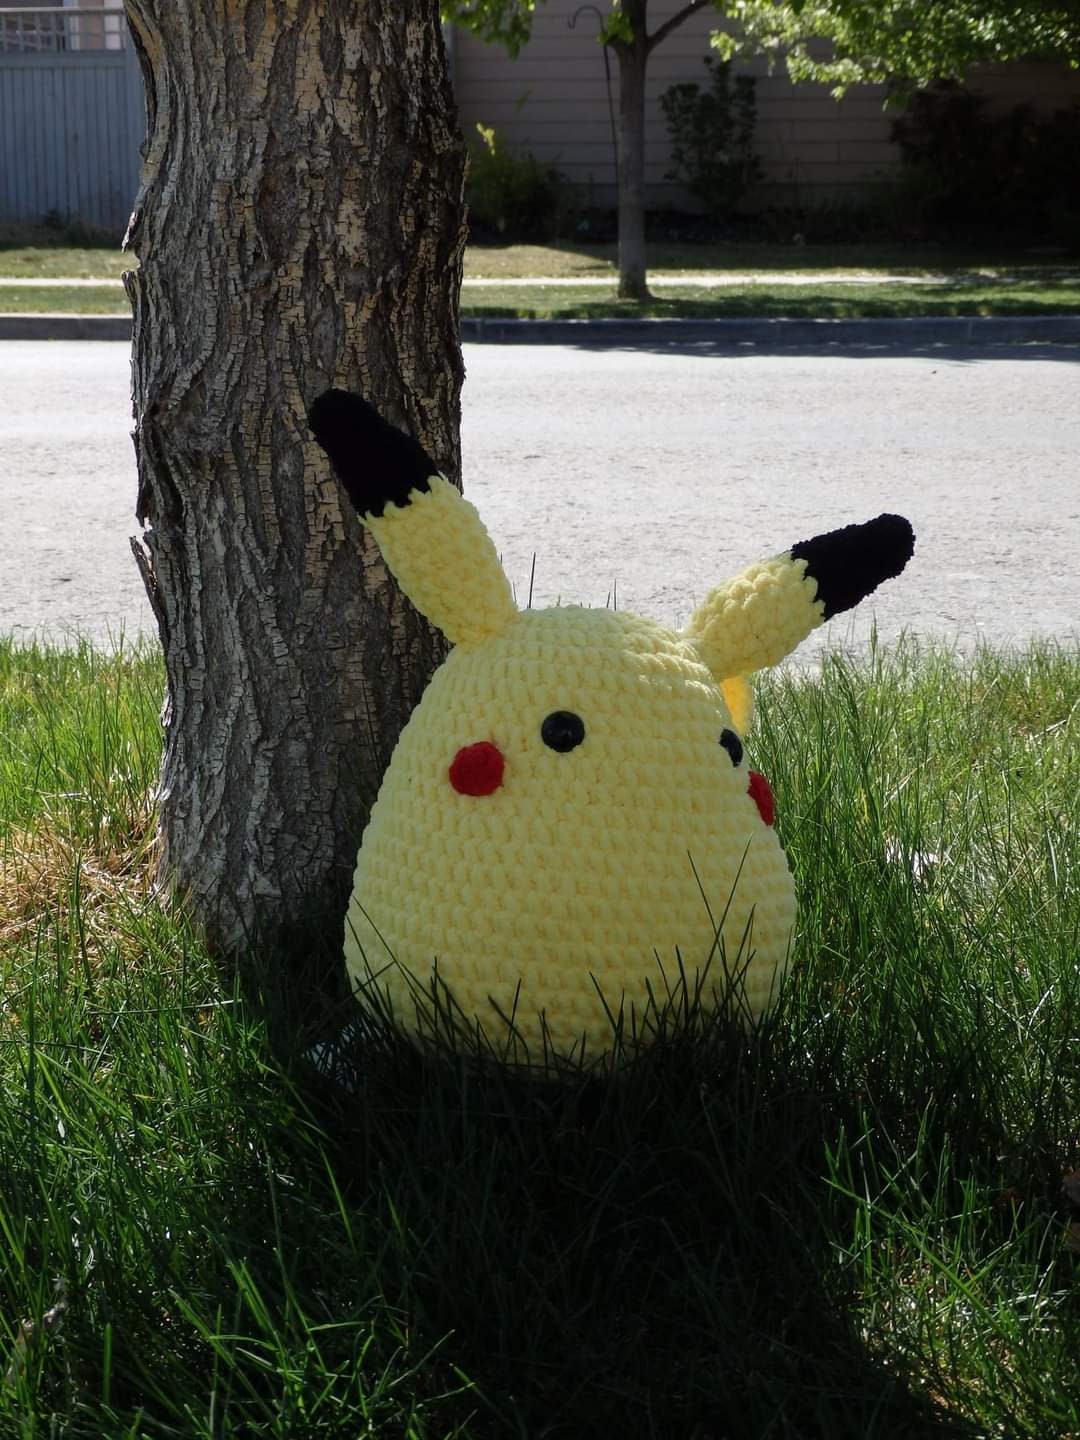 Giant Pikachu Plush - Etsy